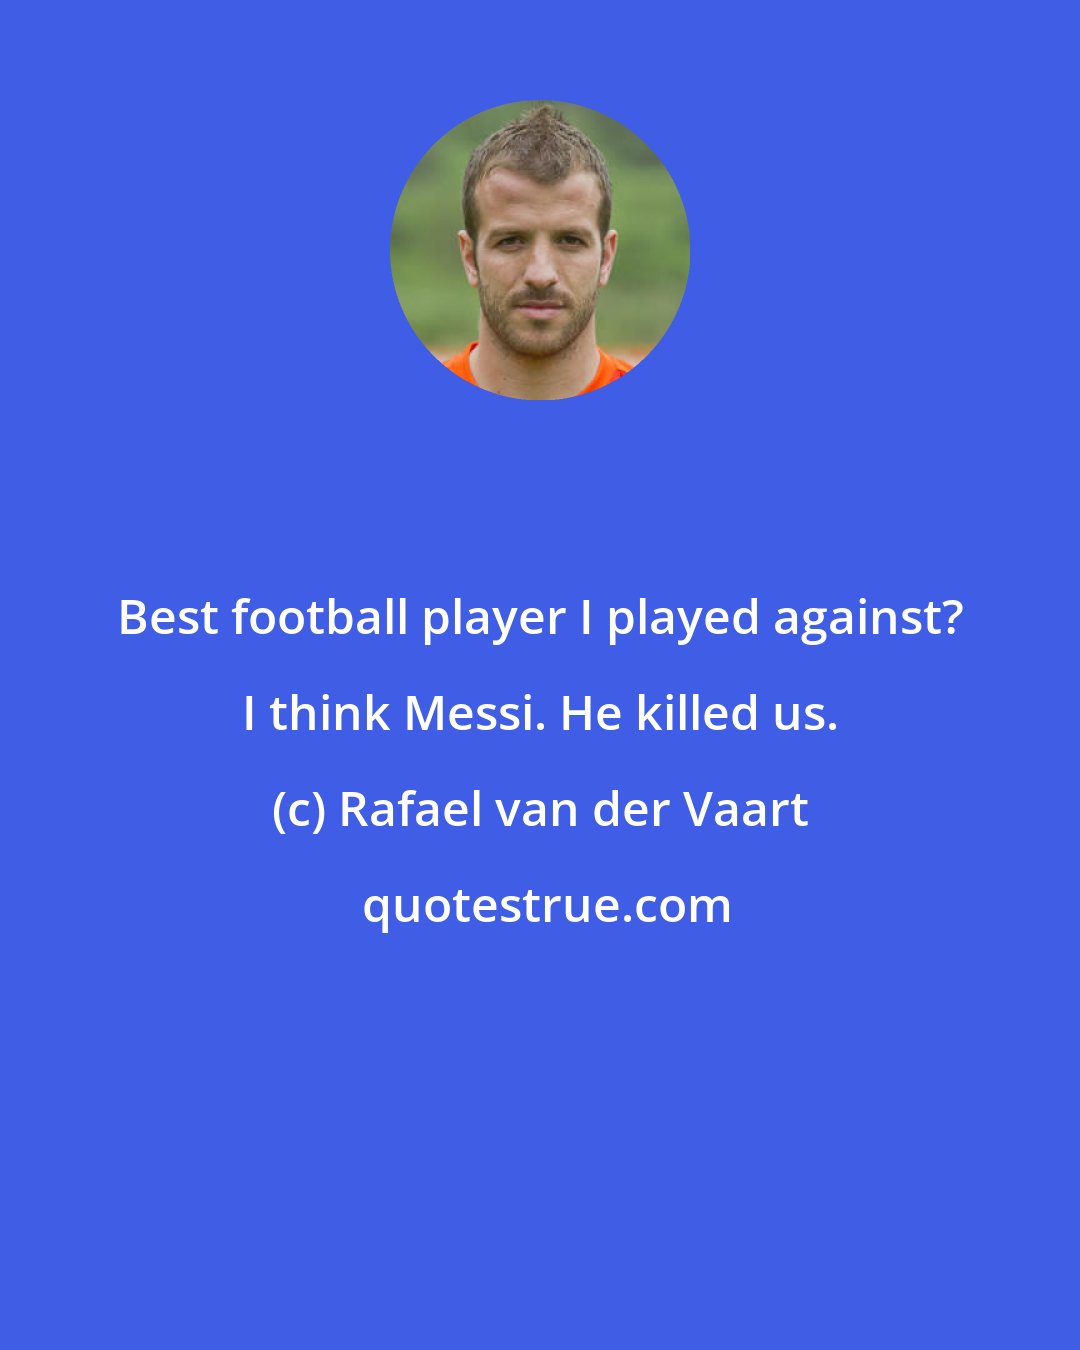 Rafael van der Vaart: Best football player I played against? I think Messi. He killed us.